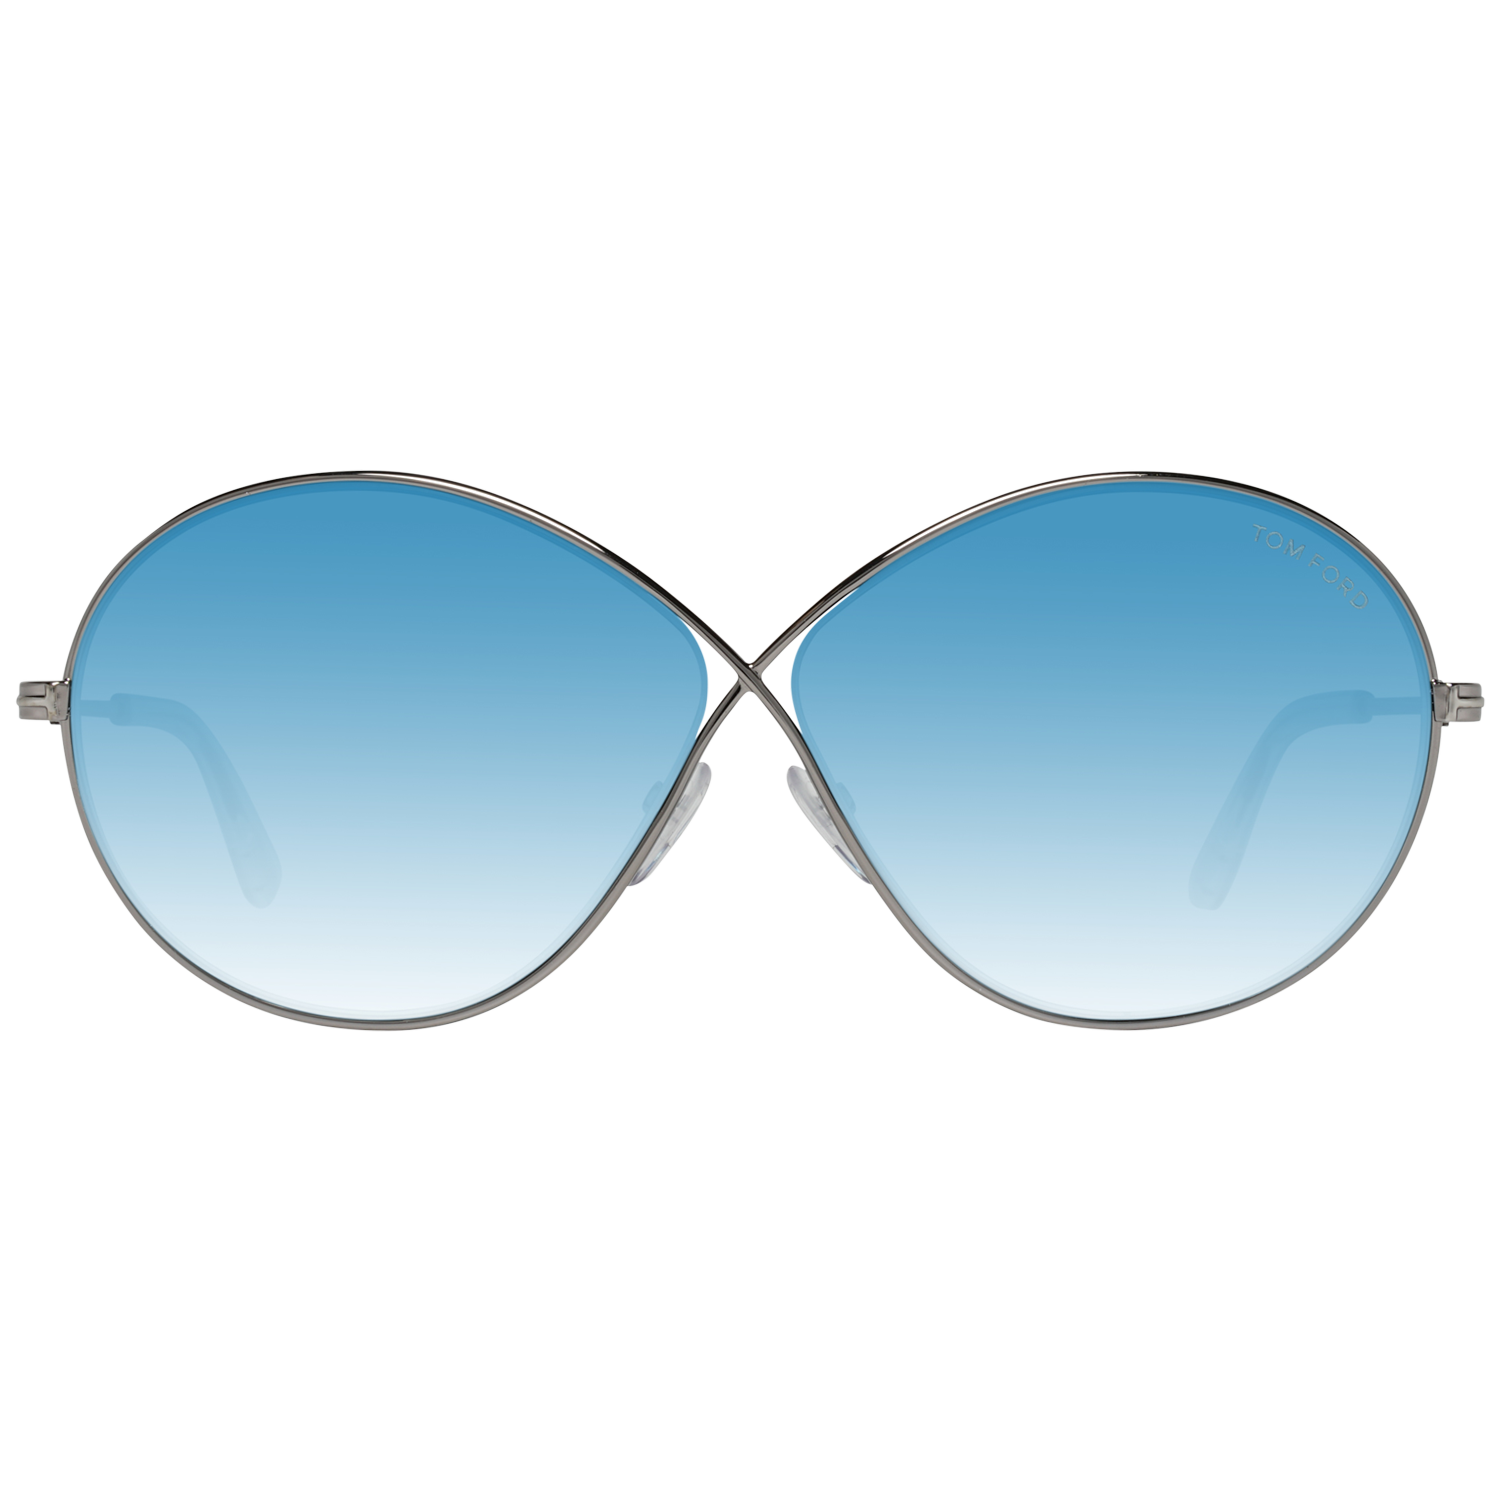 Tom Ford Sunglasses Tom Ford Sunglasses FT0564 14X 64 Eyeglasses Eyewear UK USA Australia 